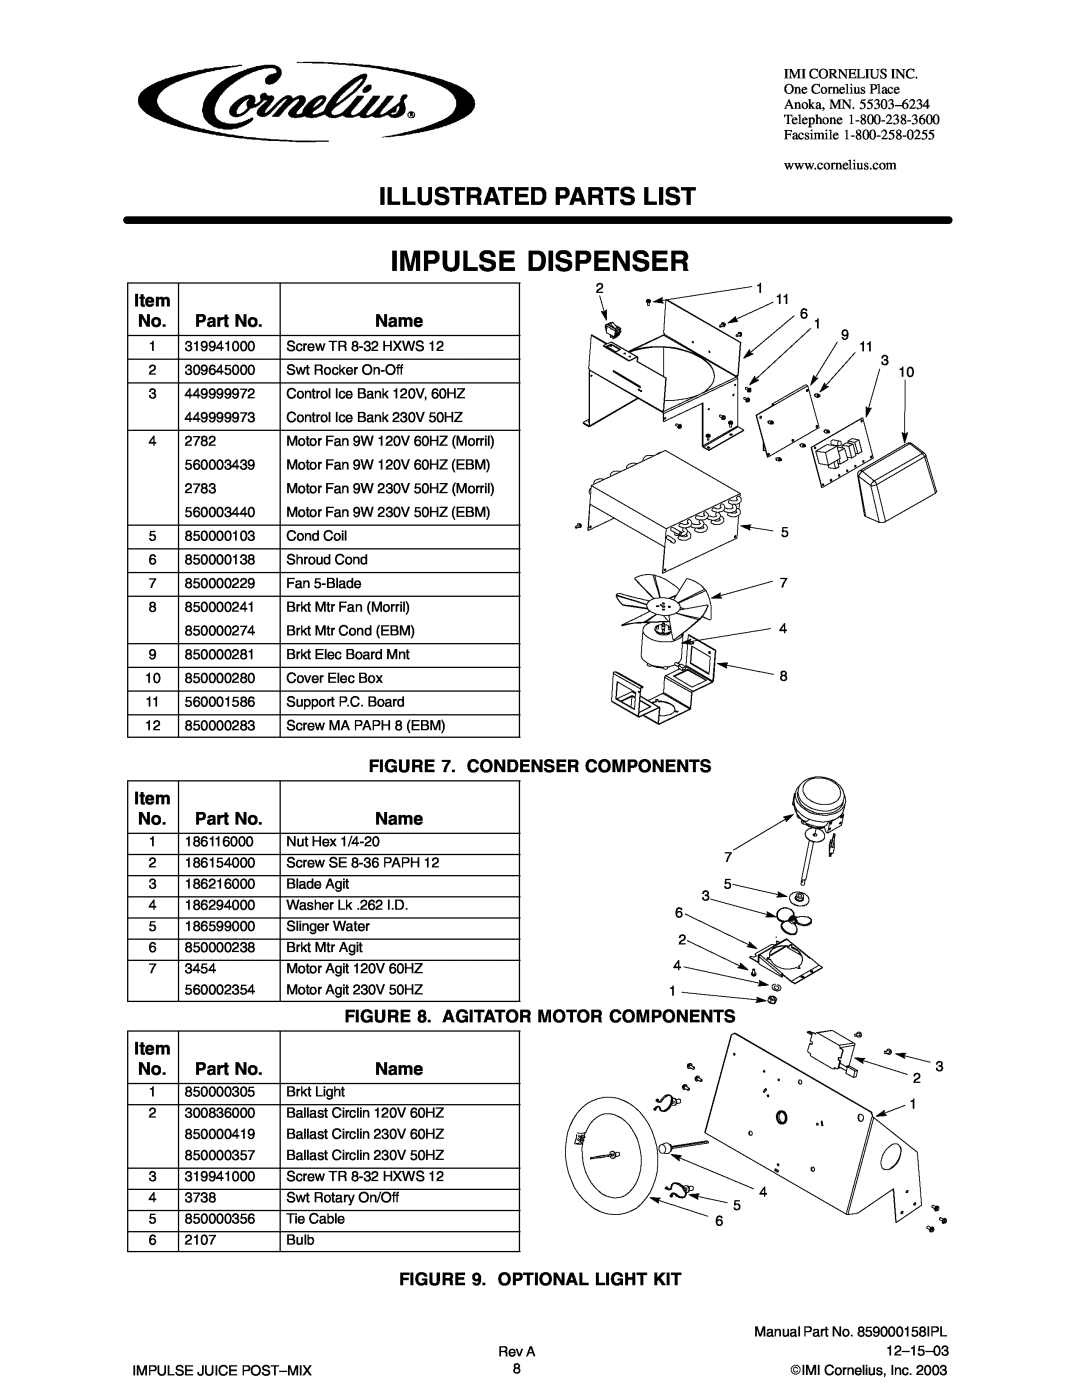 Panasonic 851000320, 851000110, 851000319, 851000109, 851000321 manual Impulse Dispenser, Illustrated Parts List 